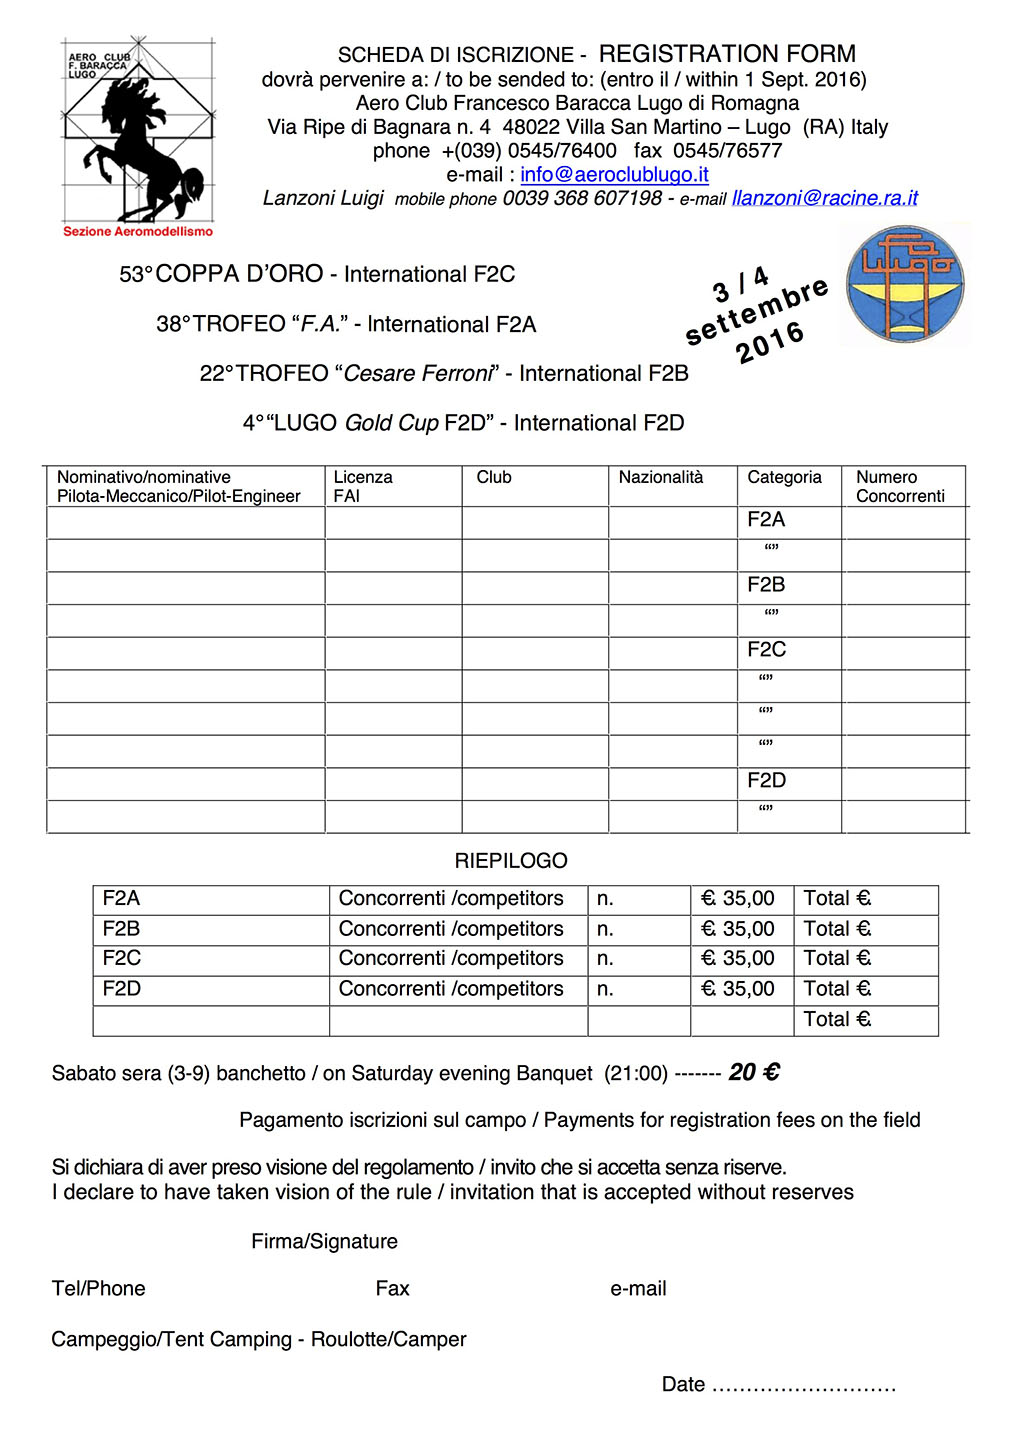 COPPA D'ORO LUGO 2016 RegistrationForm